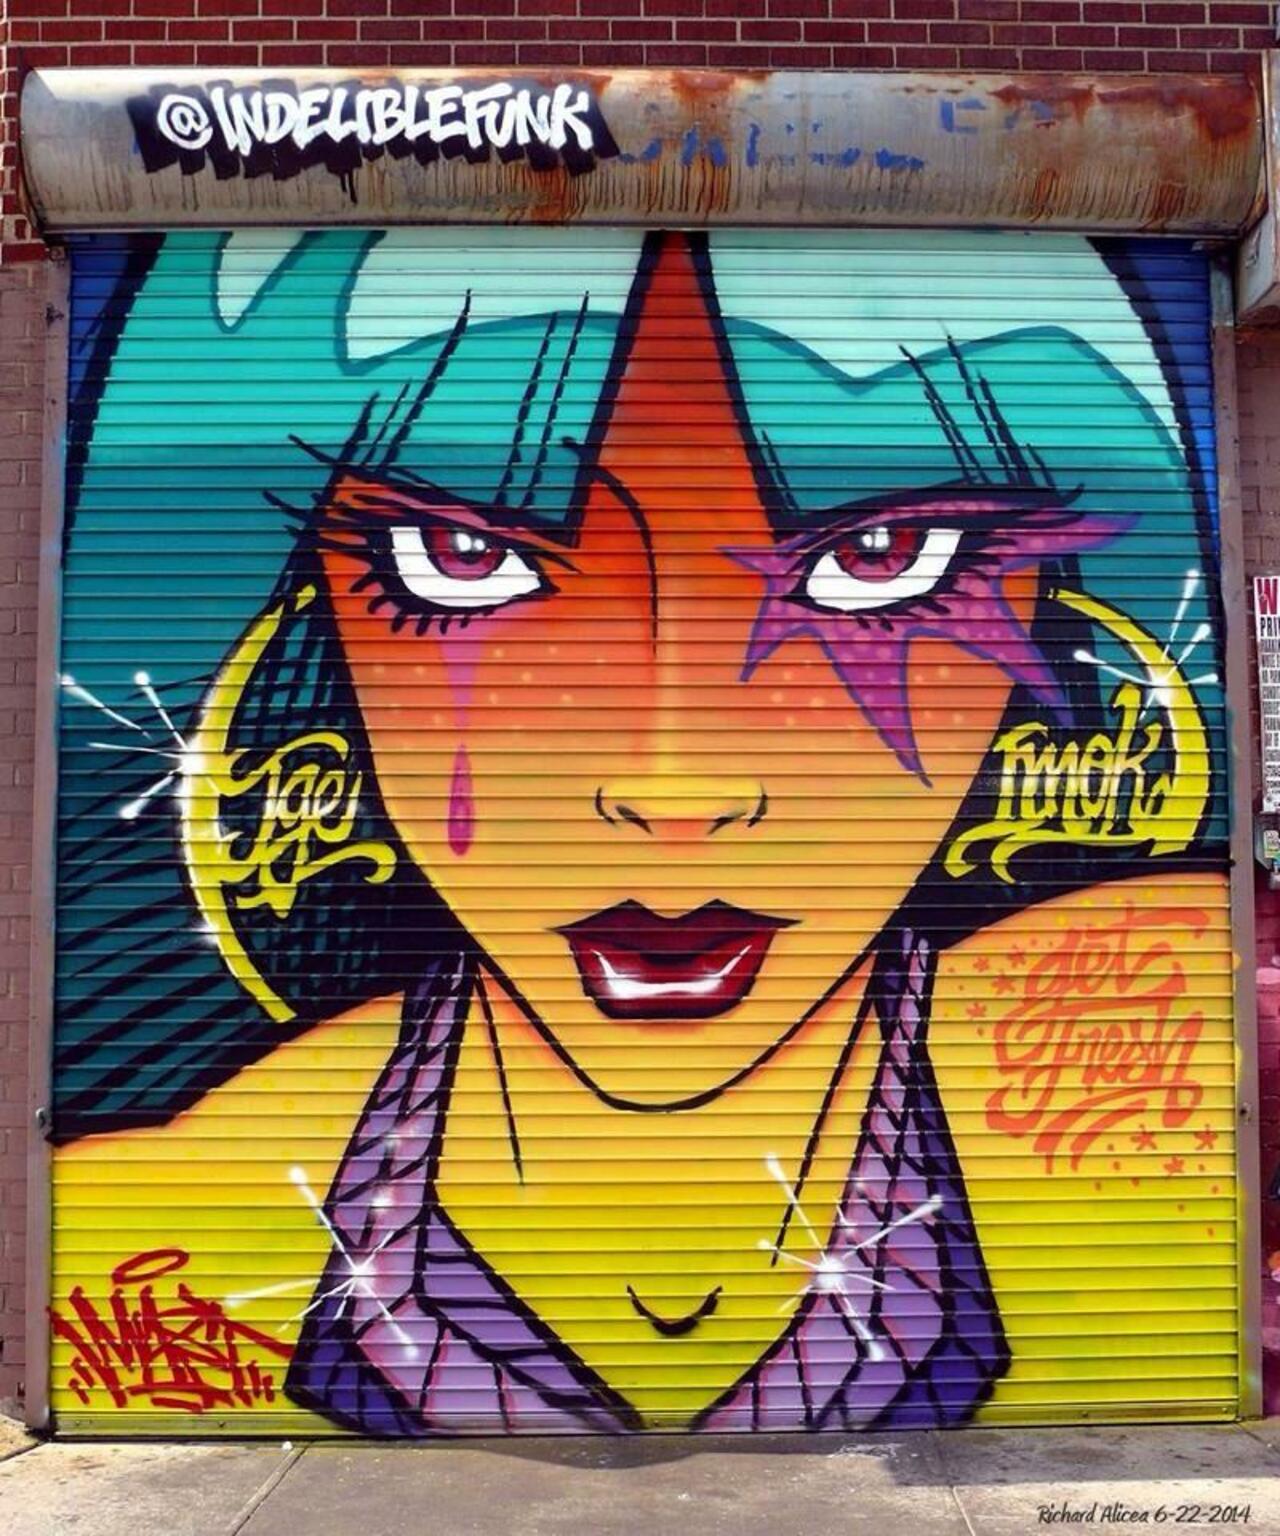 Artist 'Indeliblefunk' new Street Art work at Welling Court Queens, NY #art #mural #graffiti #streetart http://t.co/WgZre13BSK